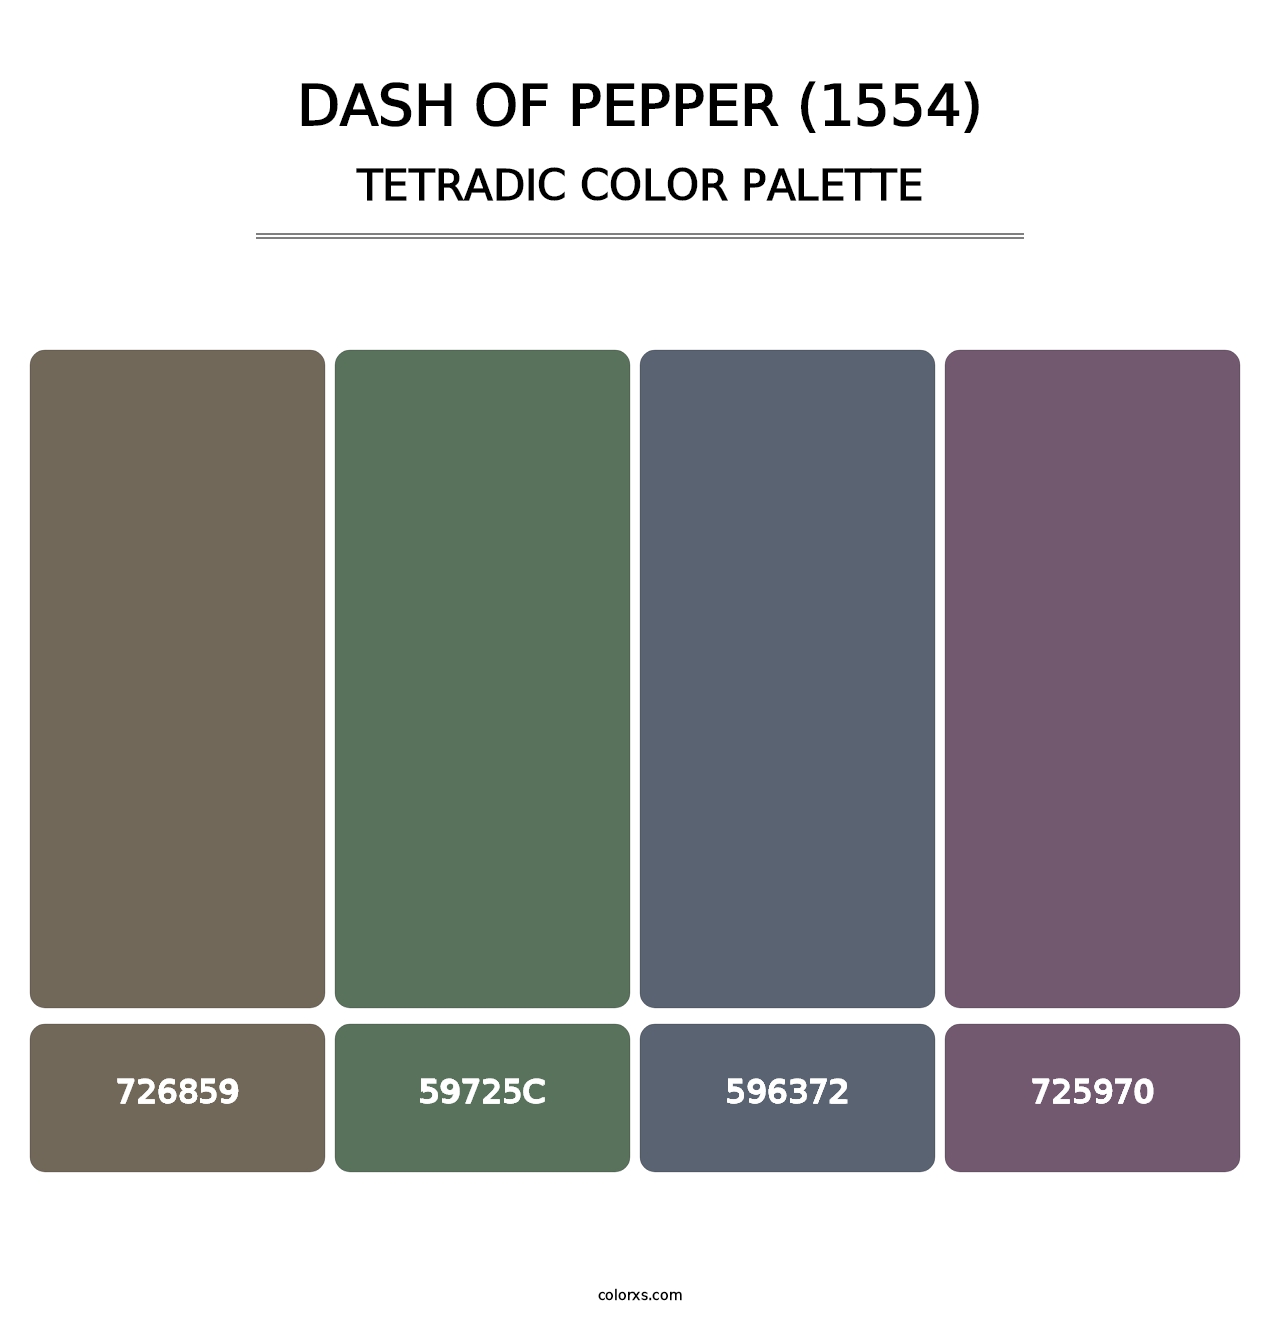 Dash of Pepper (1554) - Tetradic Color Palette